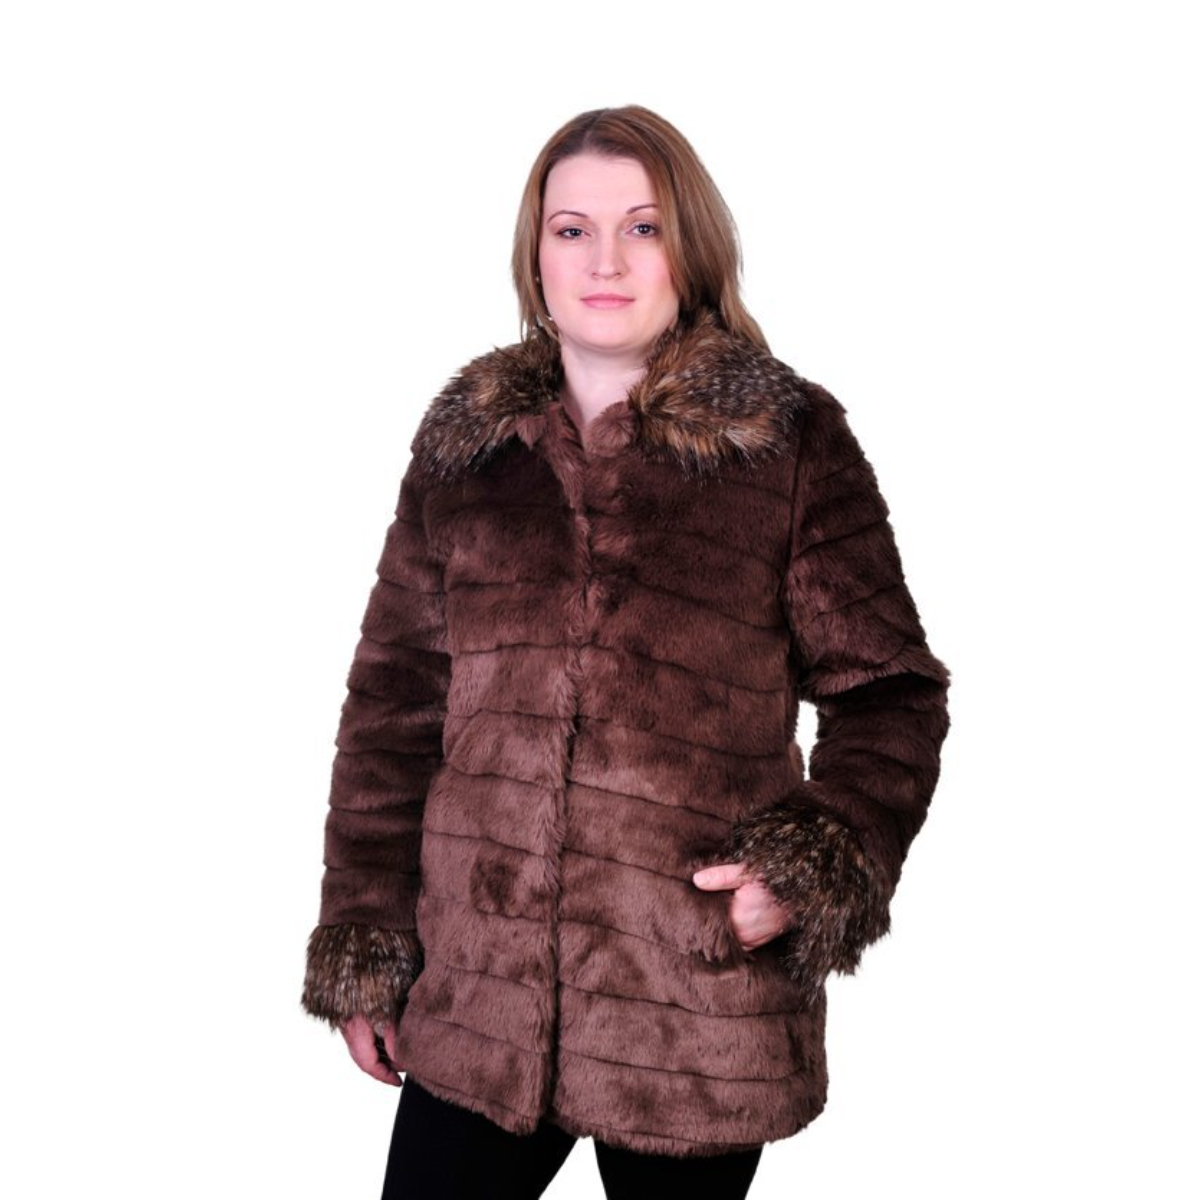 Buy a Horizontal Brown Faux Fur Jacket | Ameri Selections Inc.